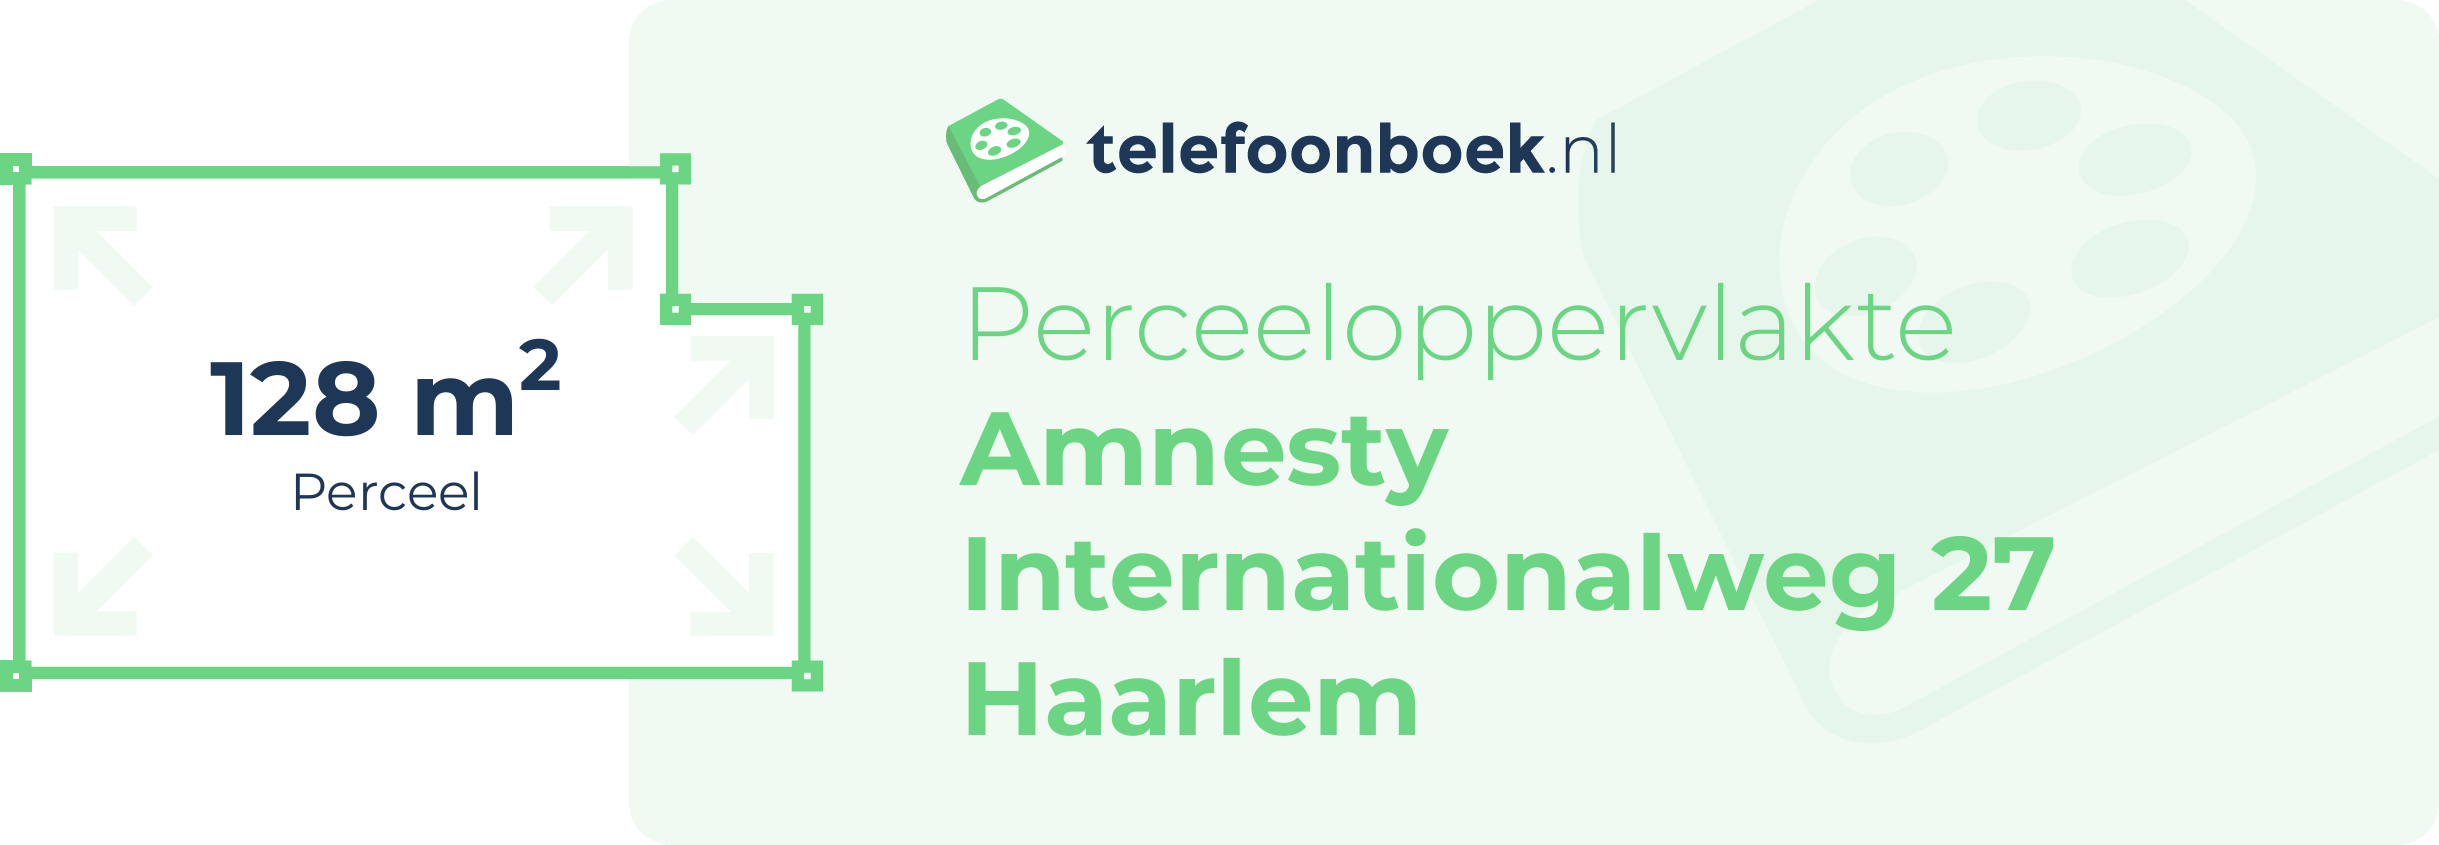 Perceeloppervlakte Amnesty Internationalweg 27 Haarlem